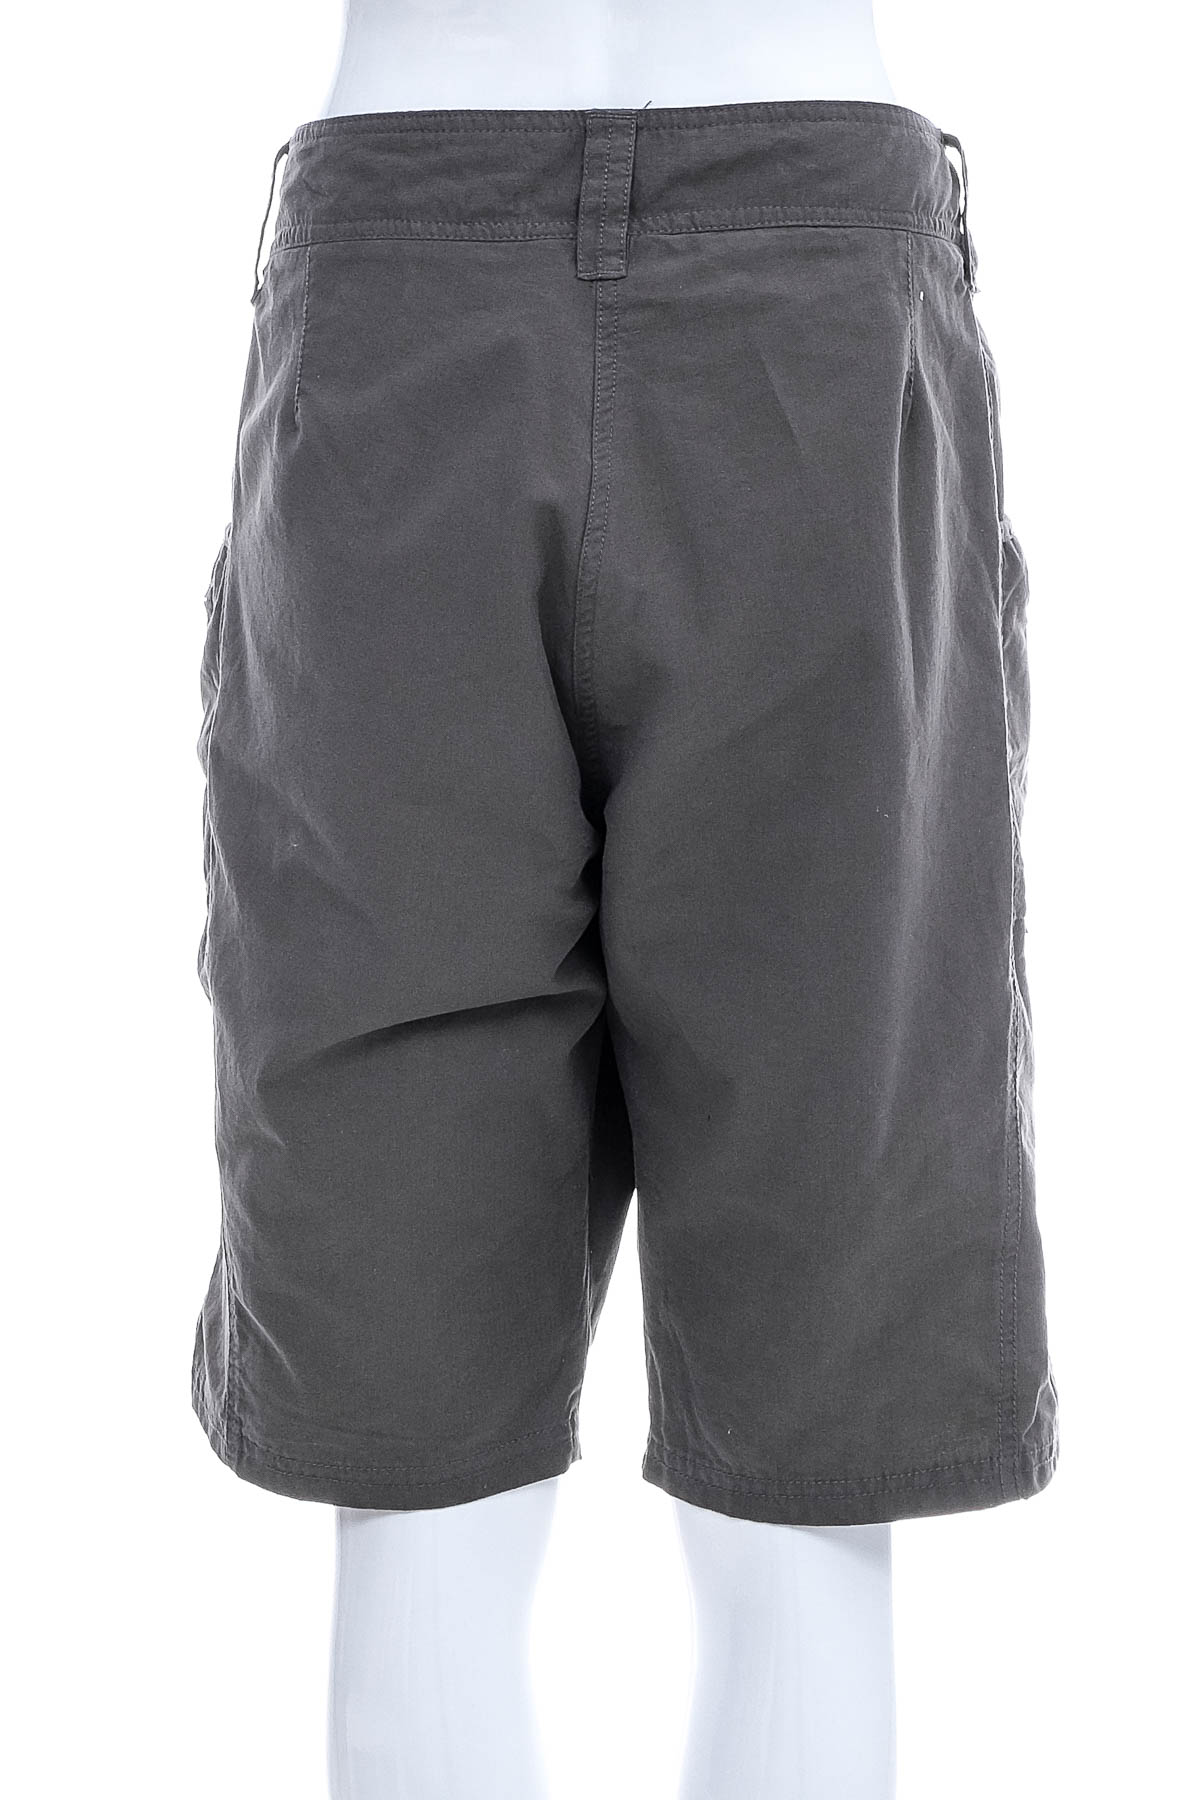 Female shorts - Gondwana - 1